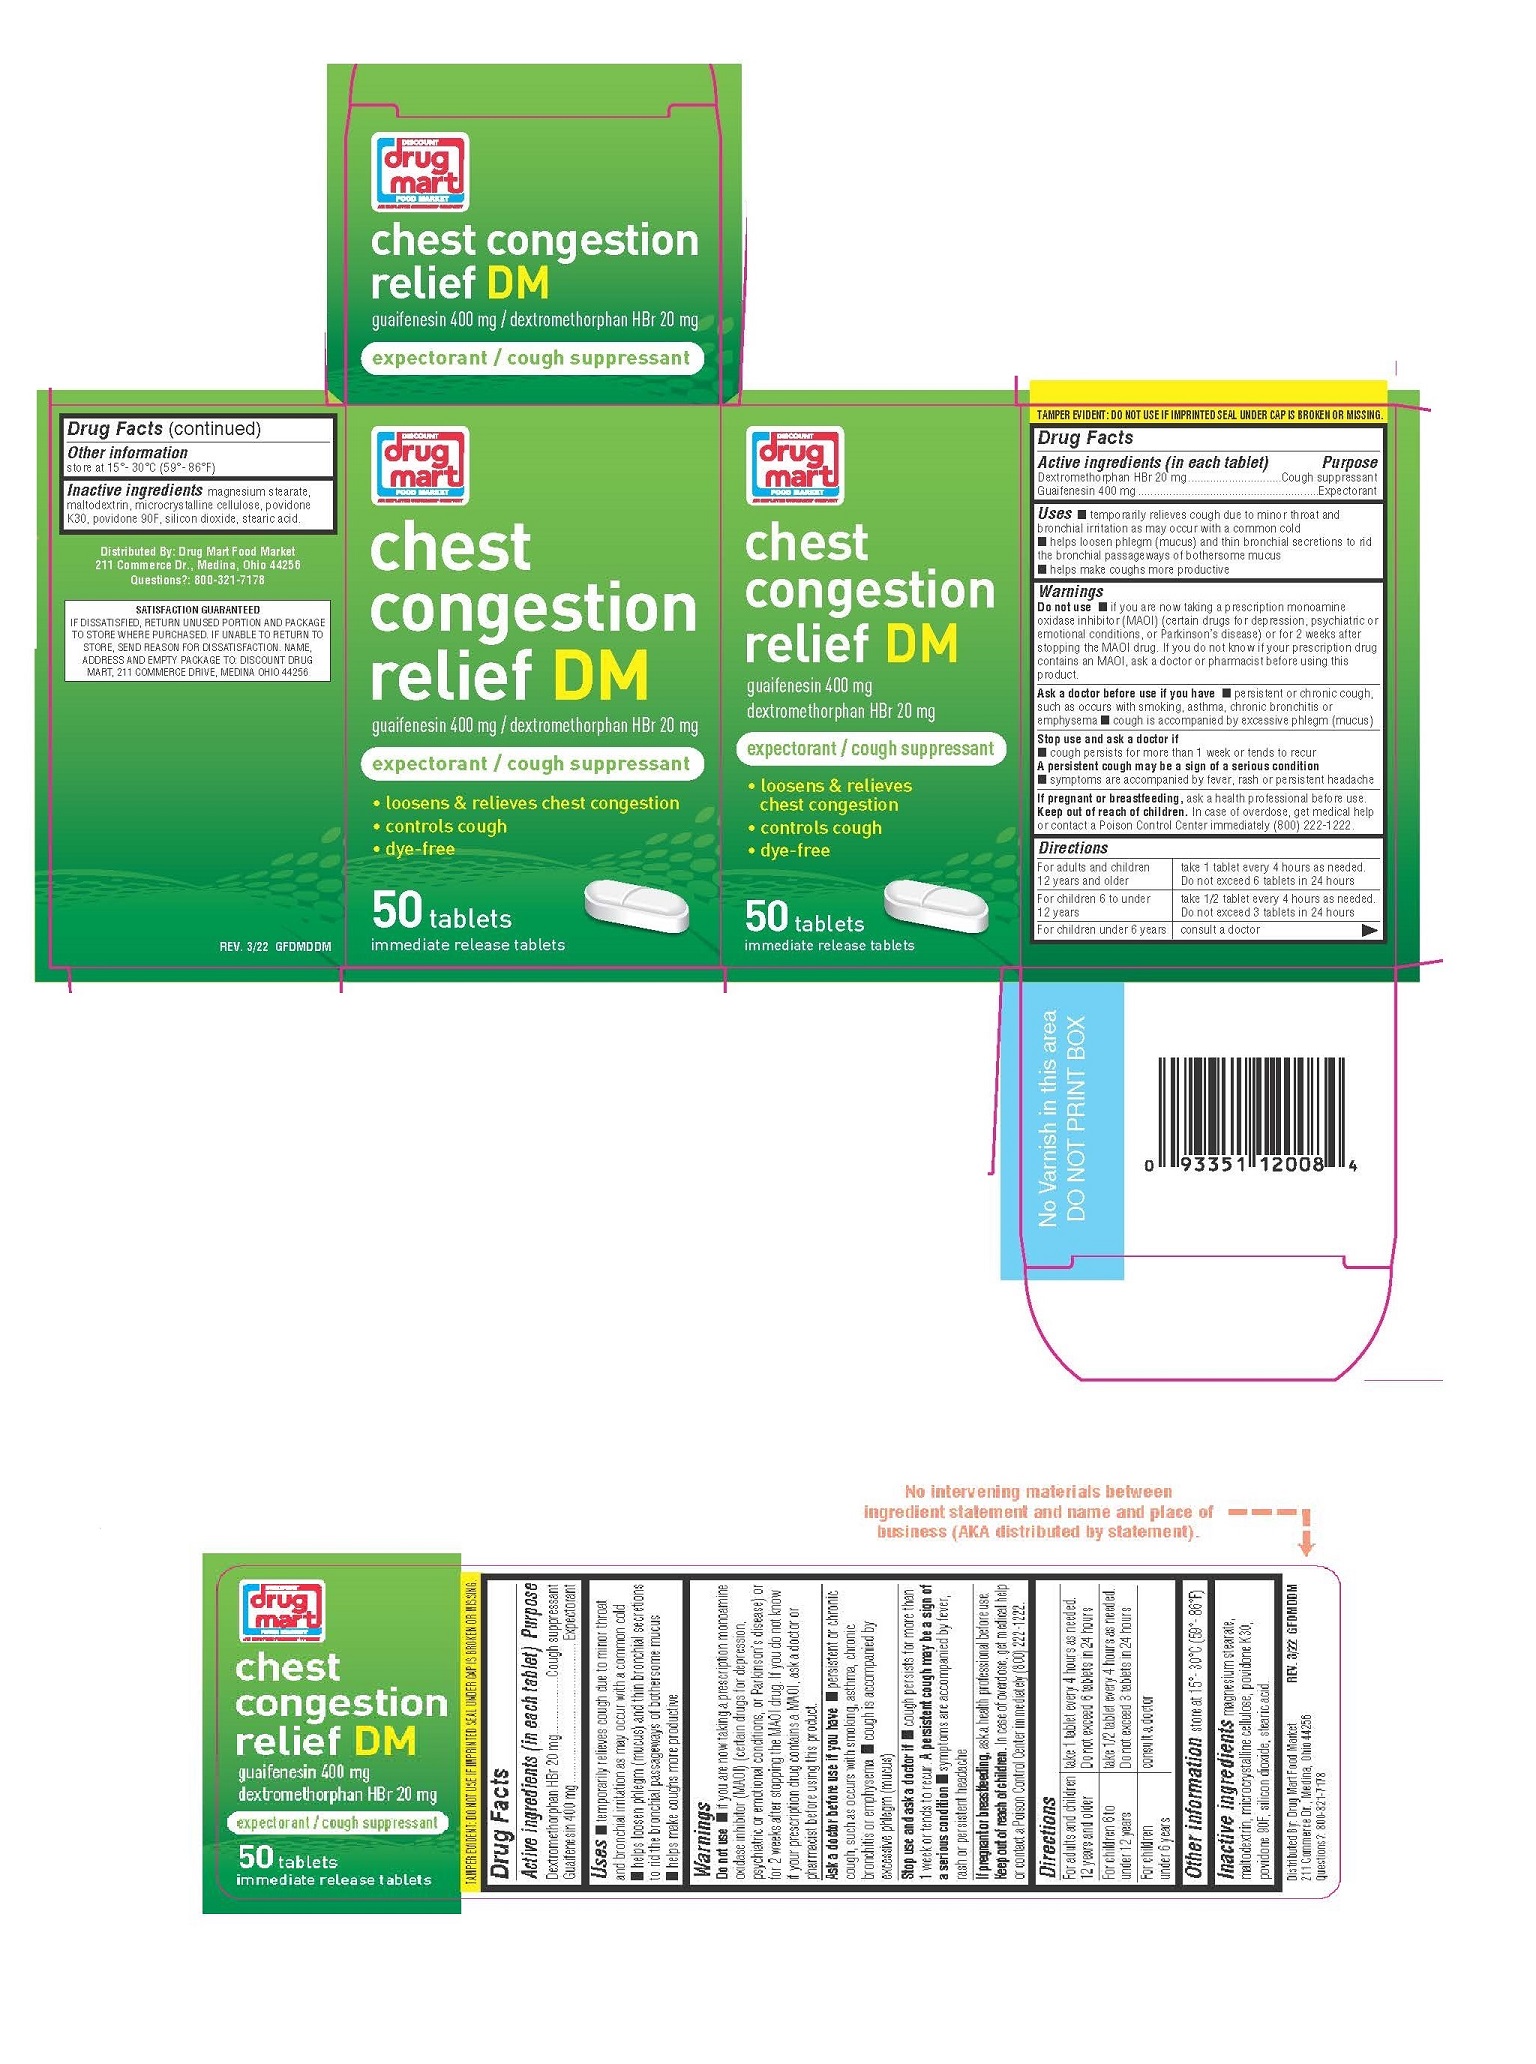 DISCOUNT DRUGMART CHEST CONGESTION RELIEF DM- dextromethorphan hydrobromide  / guaifenesin tablet